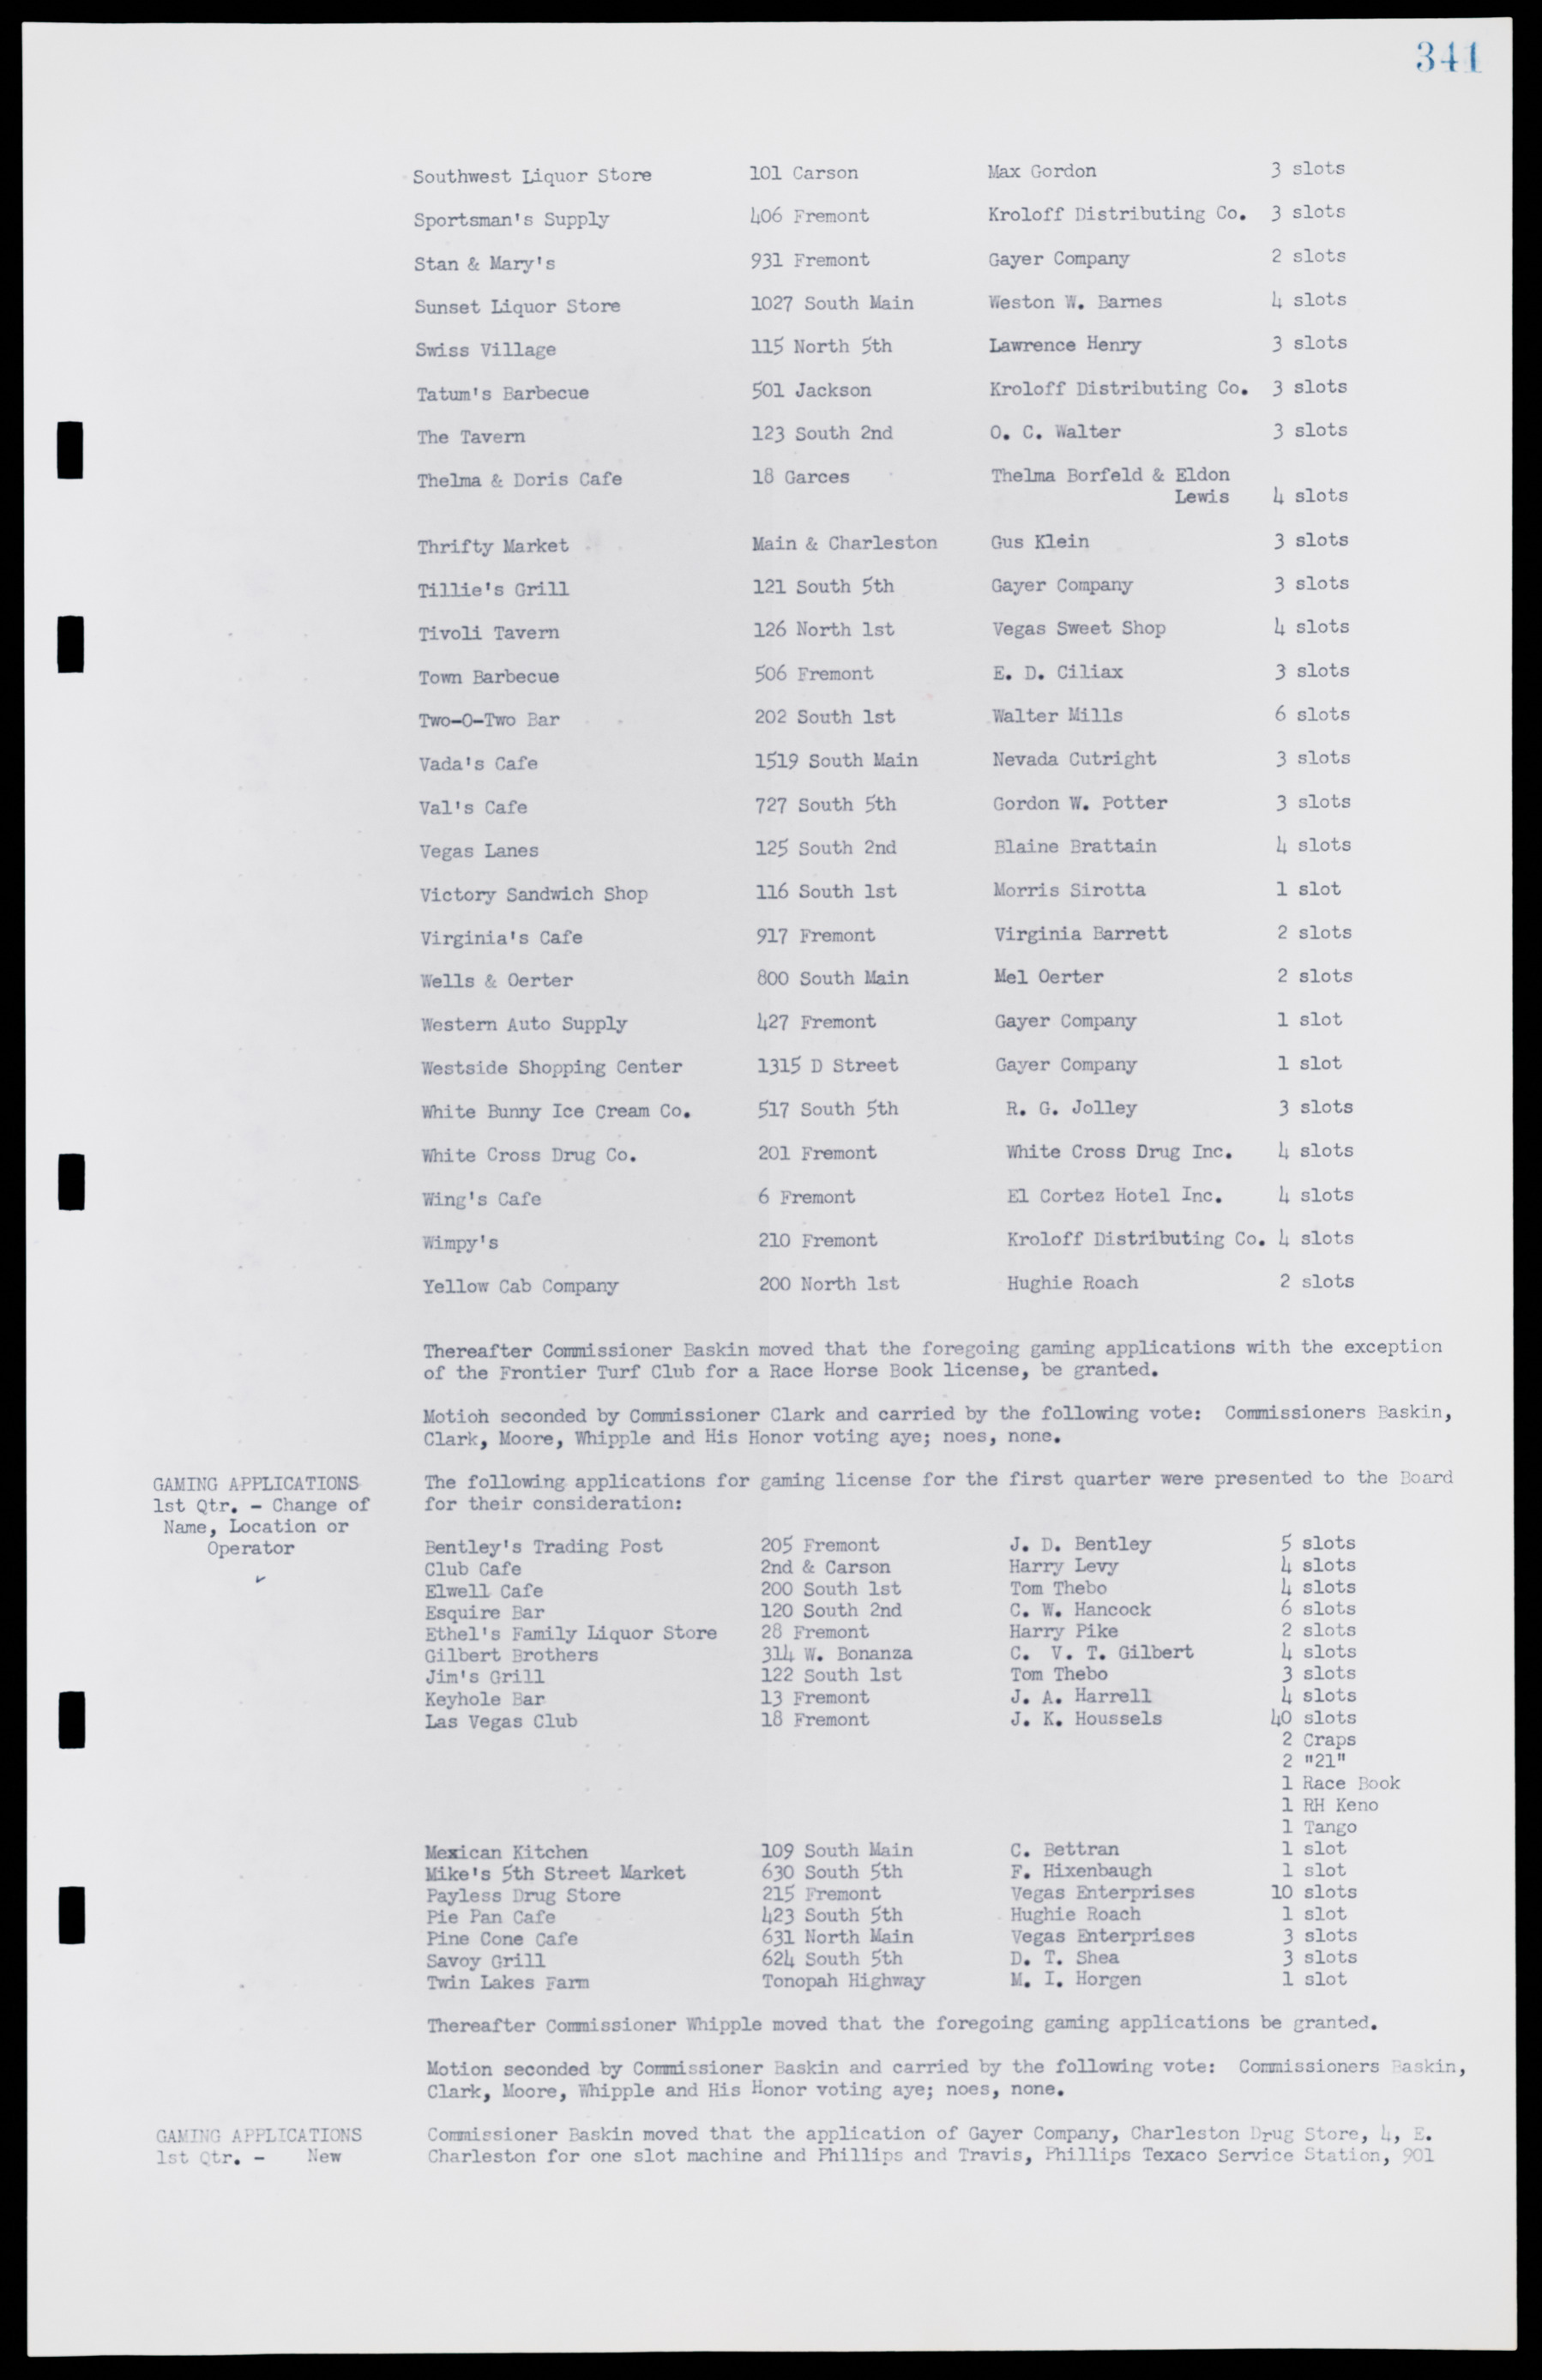 Las Vegas City Commission Minutes, January 7, 1947 to October 26, 1949, lvc000006-365